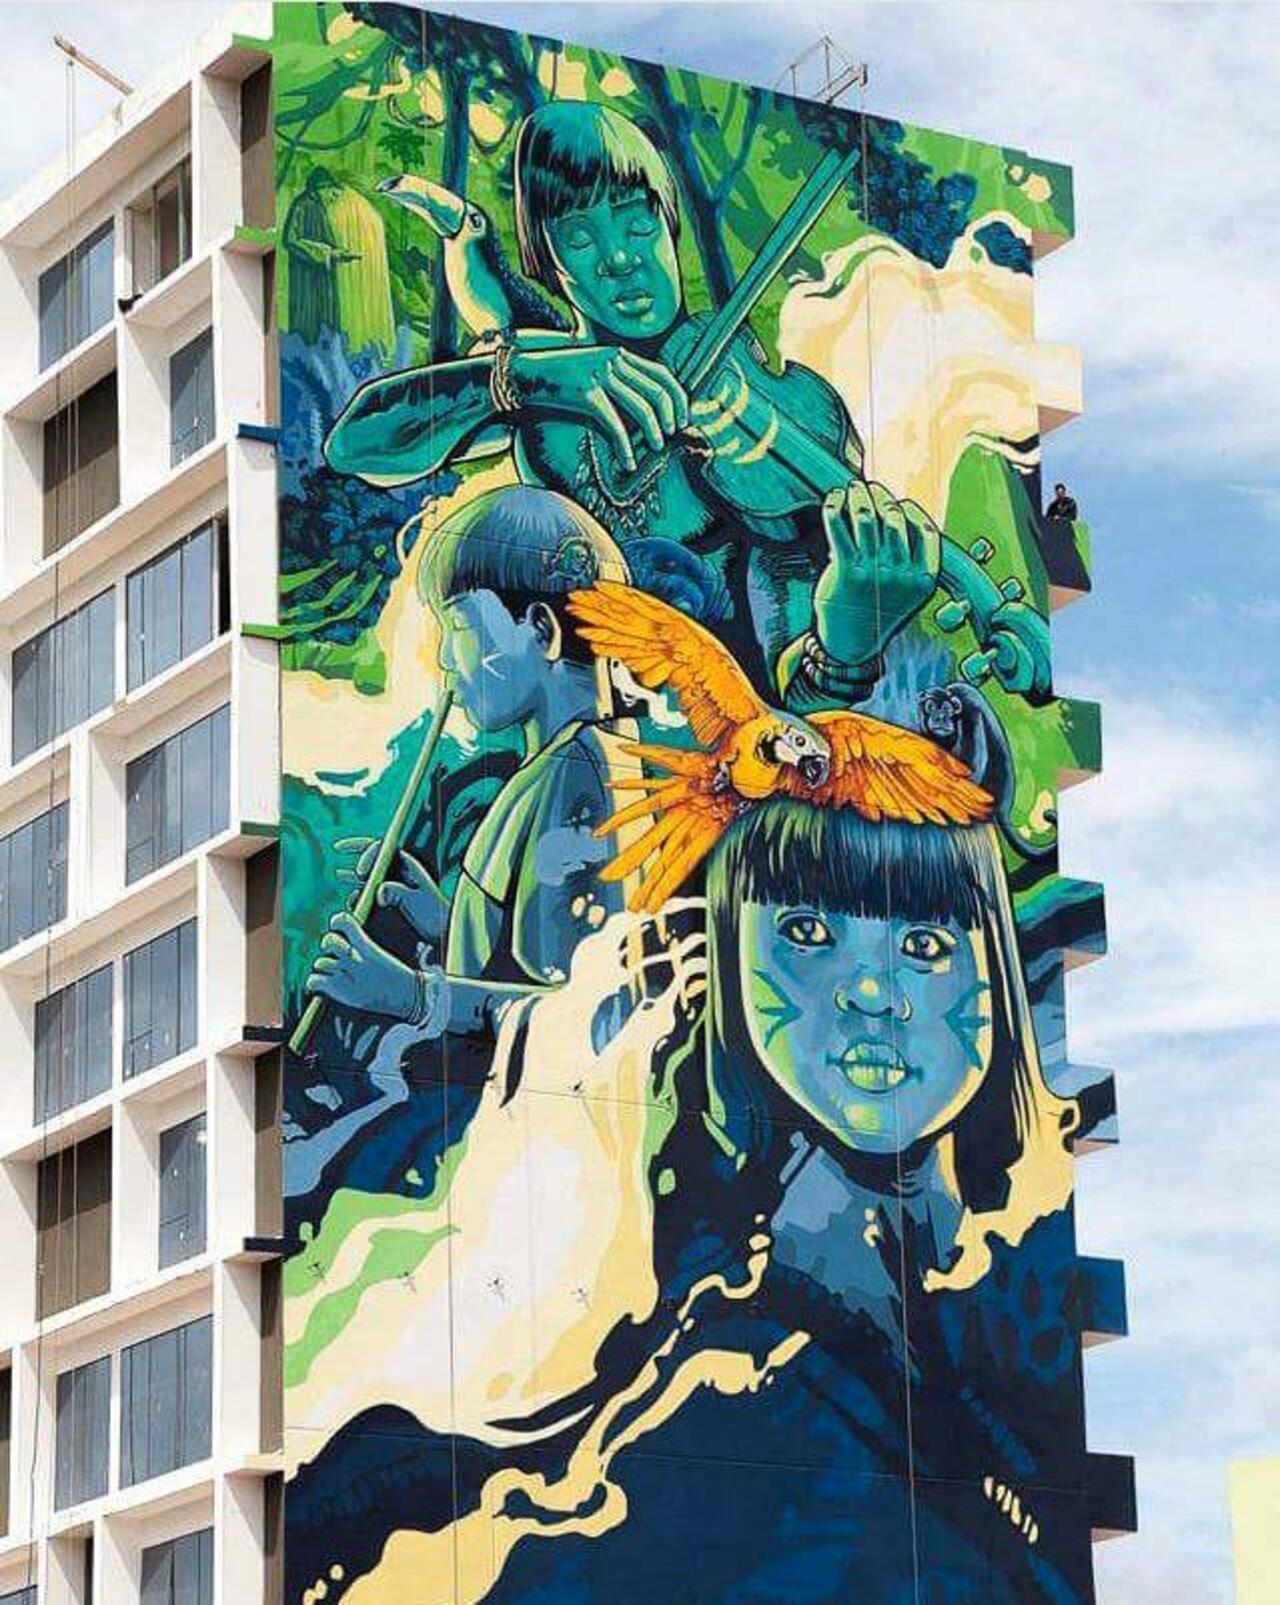 RT @pivotask: Ice & Rolo - New Street Art collaboration in Ciudad del Este, Paraguay.

#art #mural #graffiti #streetart http://t.co/iuQF4AGtdf